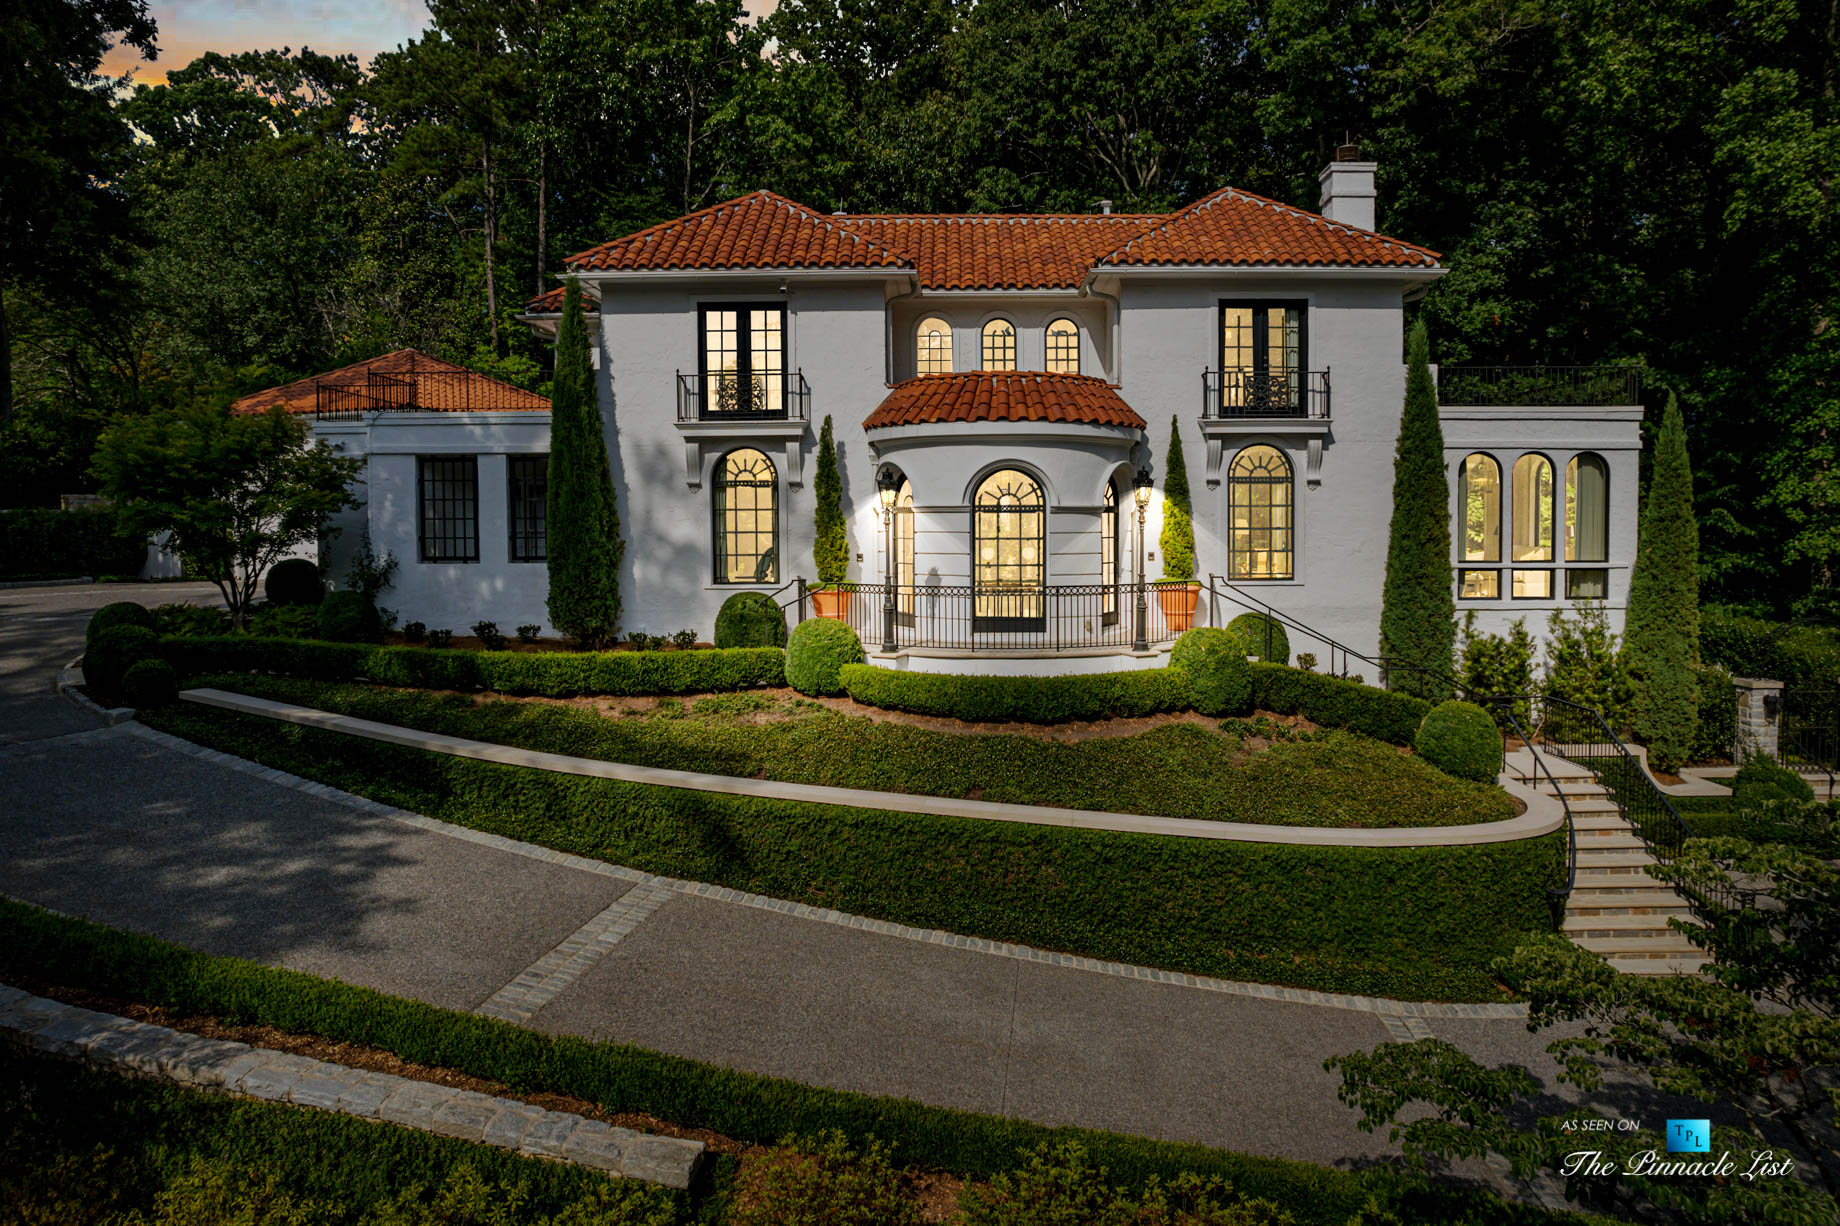 133 – 3571 Tuxedo Park Dr NW, Atlanta, GA, USA – Tuxedo Park – Luxury Real Estate